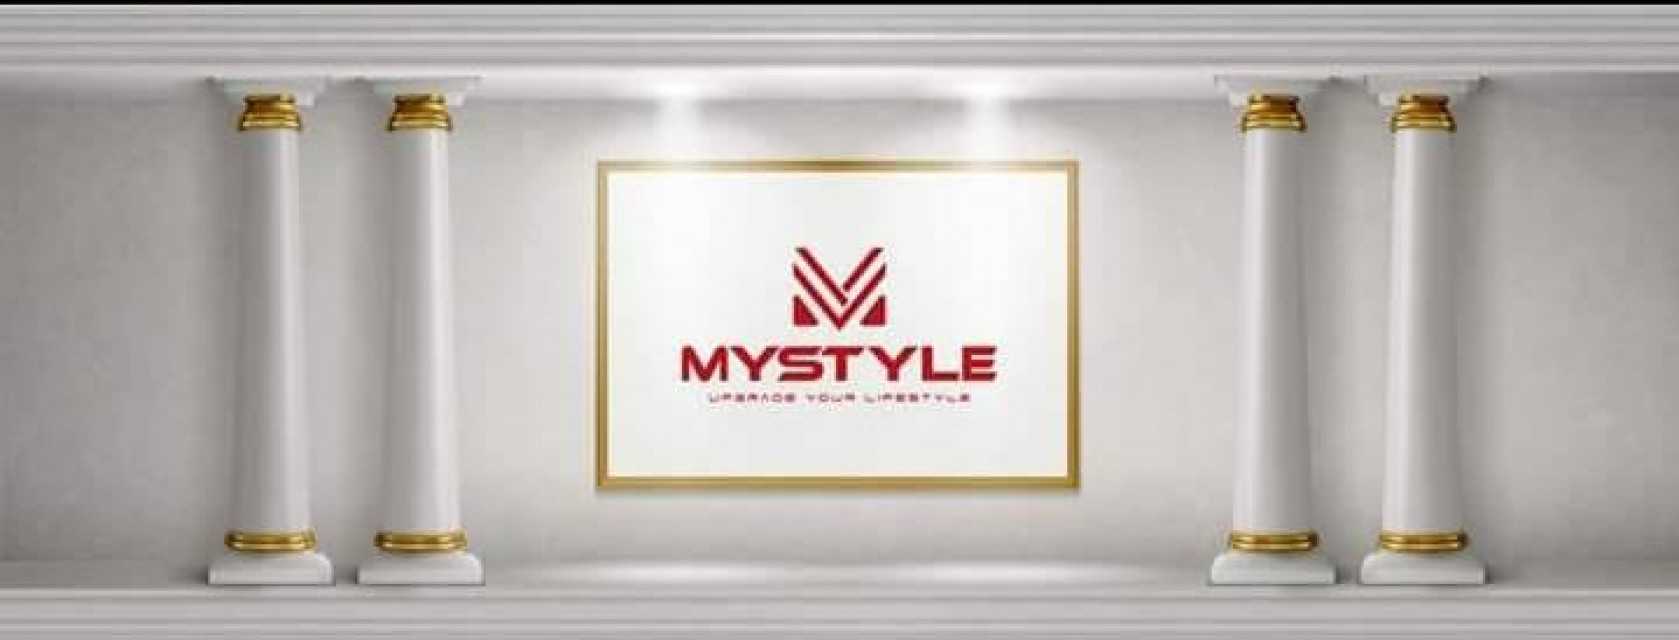 Mystyle Bangladesh Limited